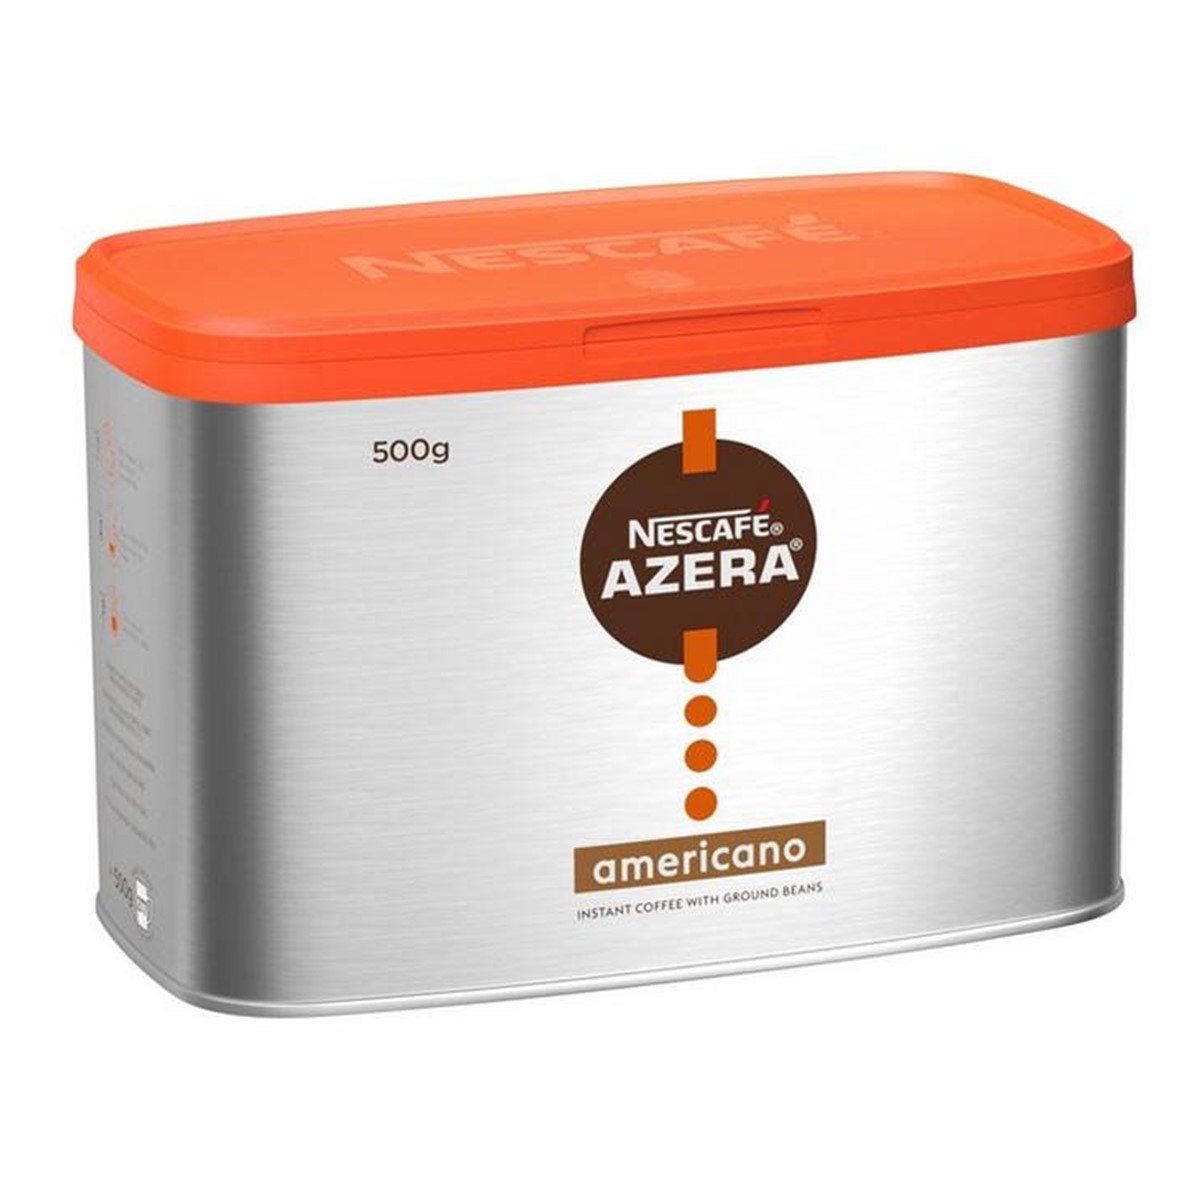 Nescafe Azera Americano Instant Coffee - 500g tin